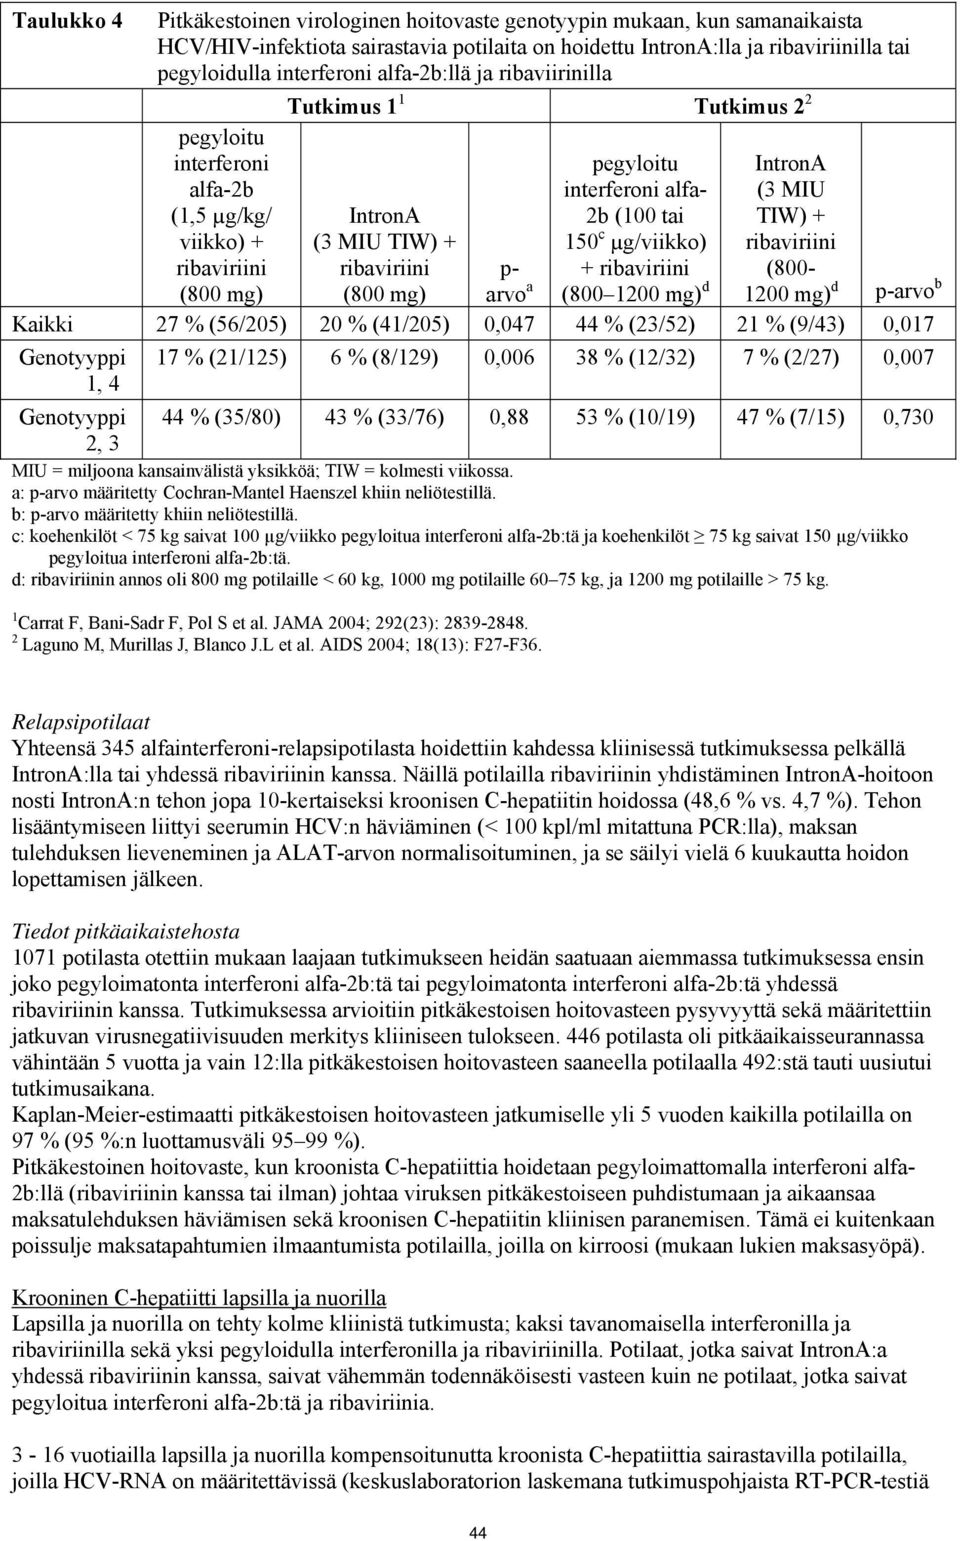 interferoni alfa- 2b (100 tai 150 c µg/viikko) + ribaviriini (800 1200 mg) d IntronA (3 MIU TIW) + ribaviriini (800-1200 mg) d p-arvo b Kaikki 27 % (56/205) 20 % (41/205) 0,047 44 % (23/52) 21 %